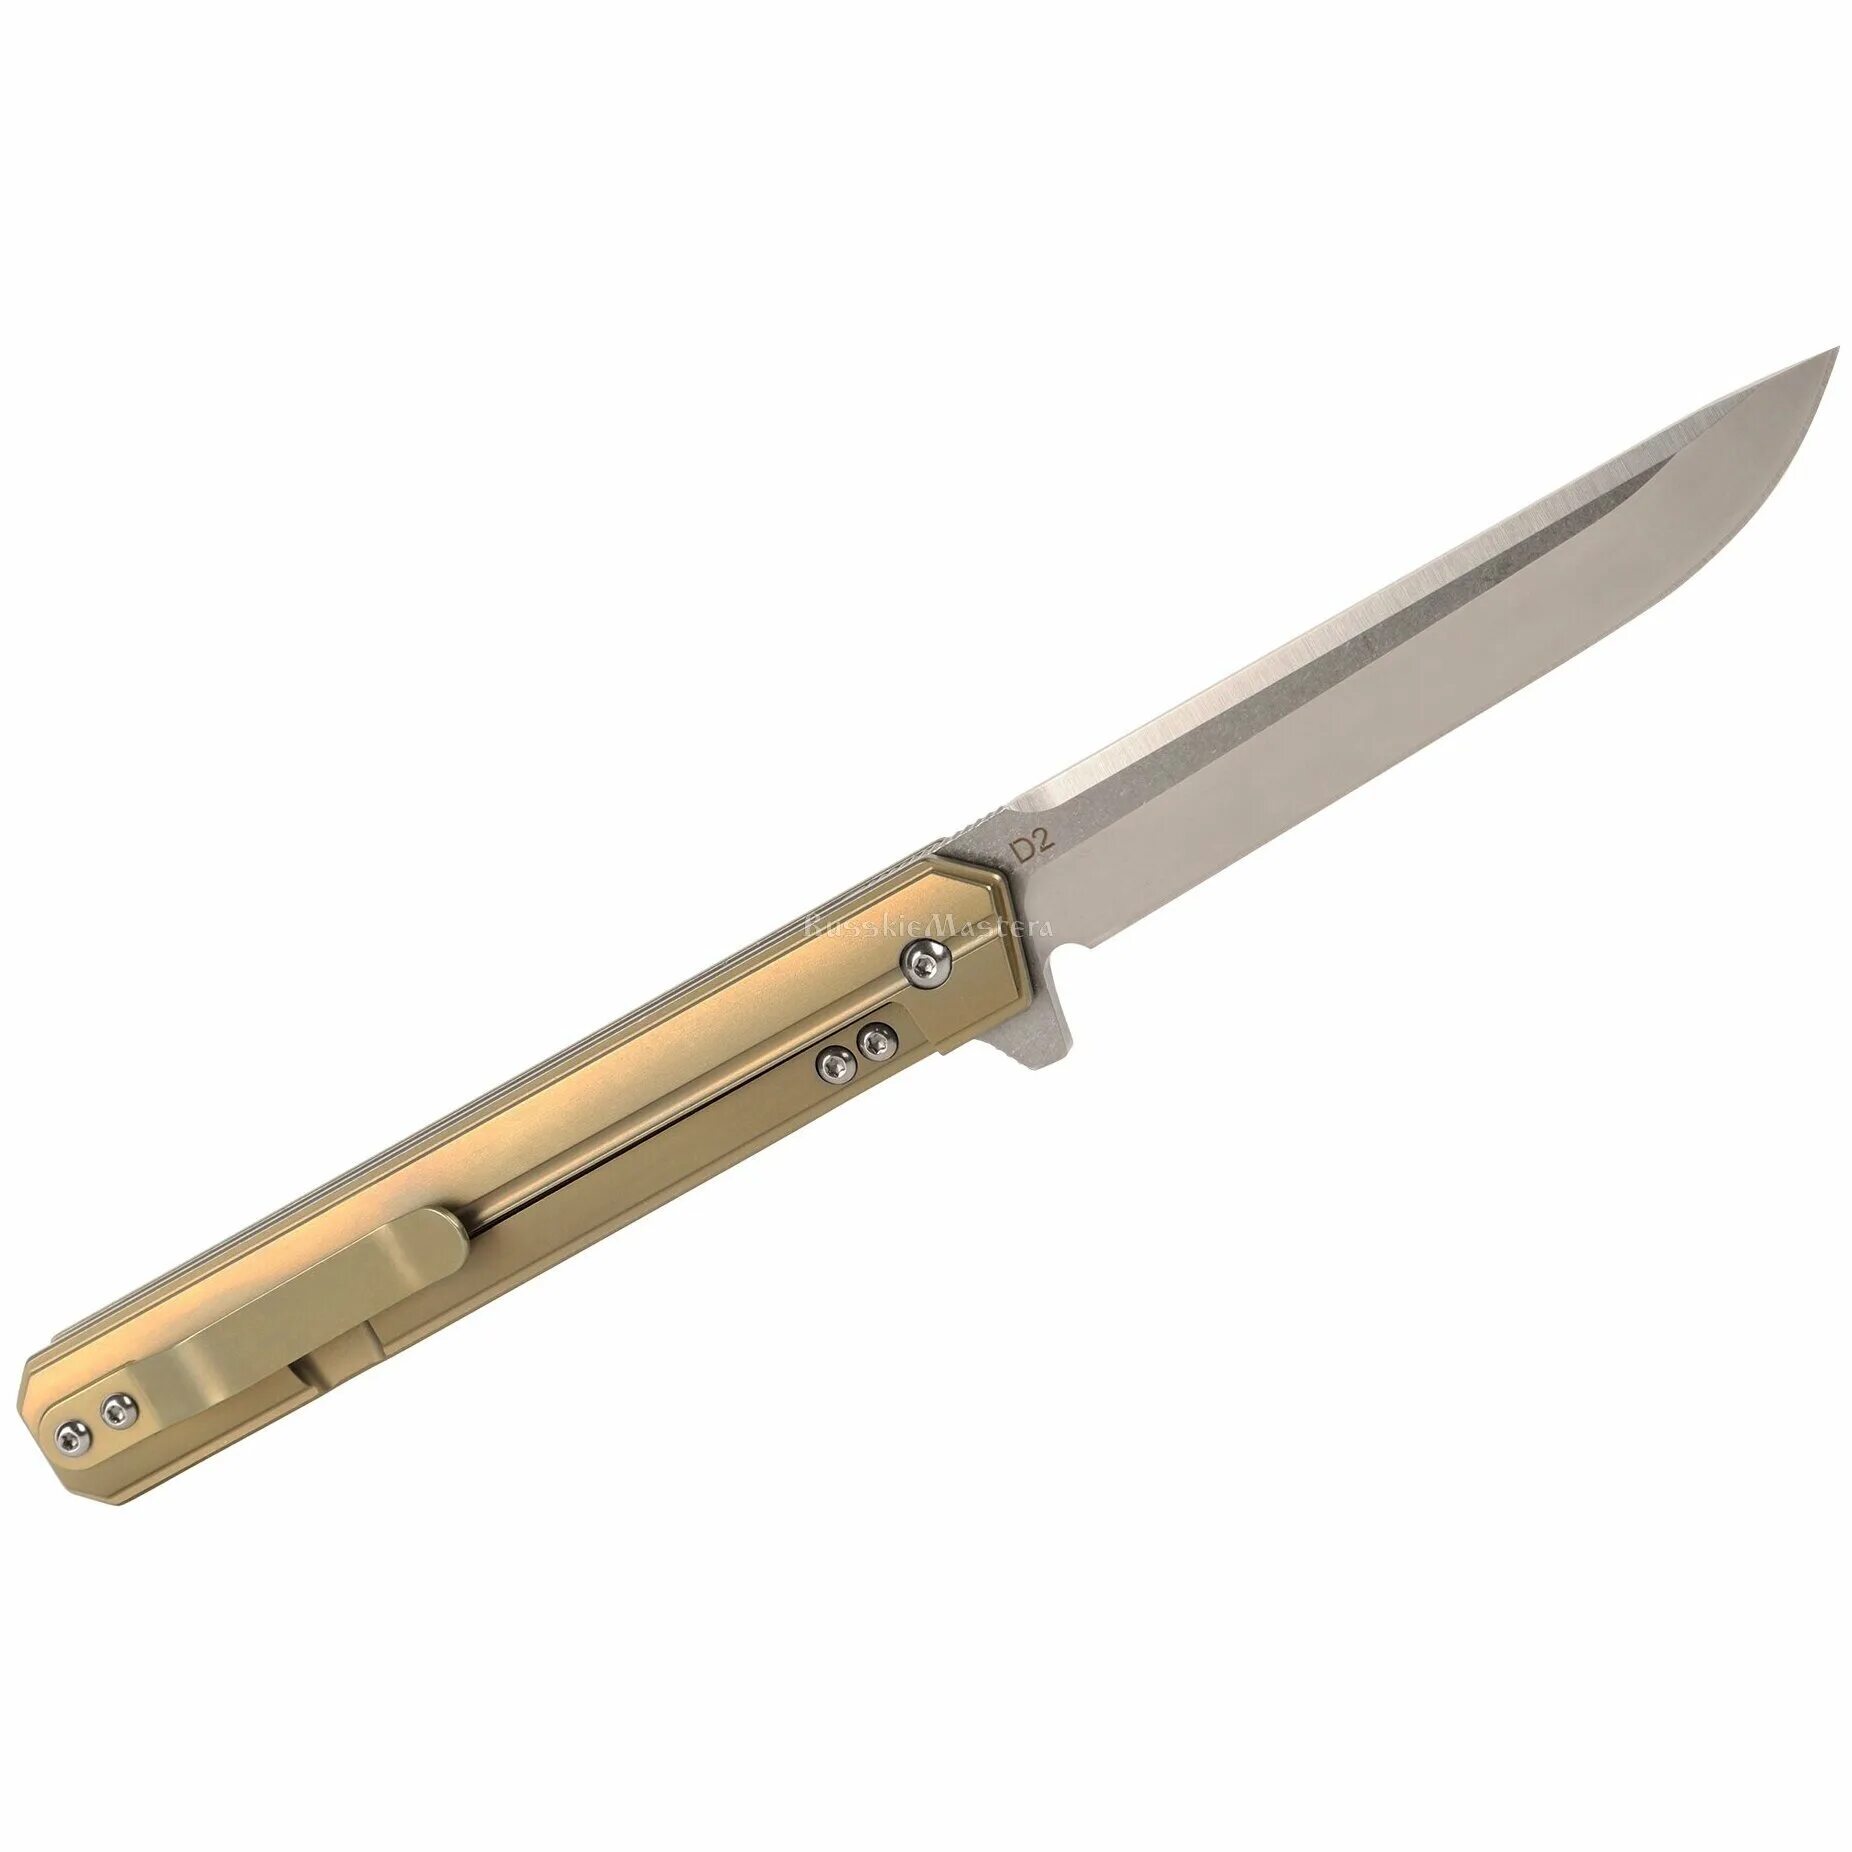 Ножи tuotown купить. Нож TUOTOWN складной. Нож TUOTOWN новый. Нож TUOTOWN 15 см. Ручка из титана Тайвань отзывы.